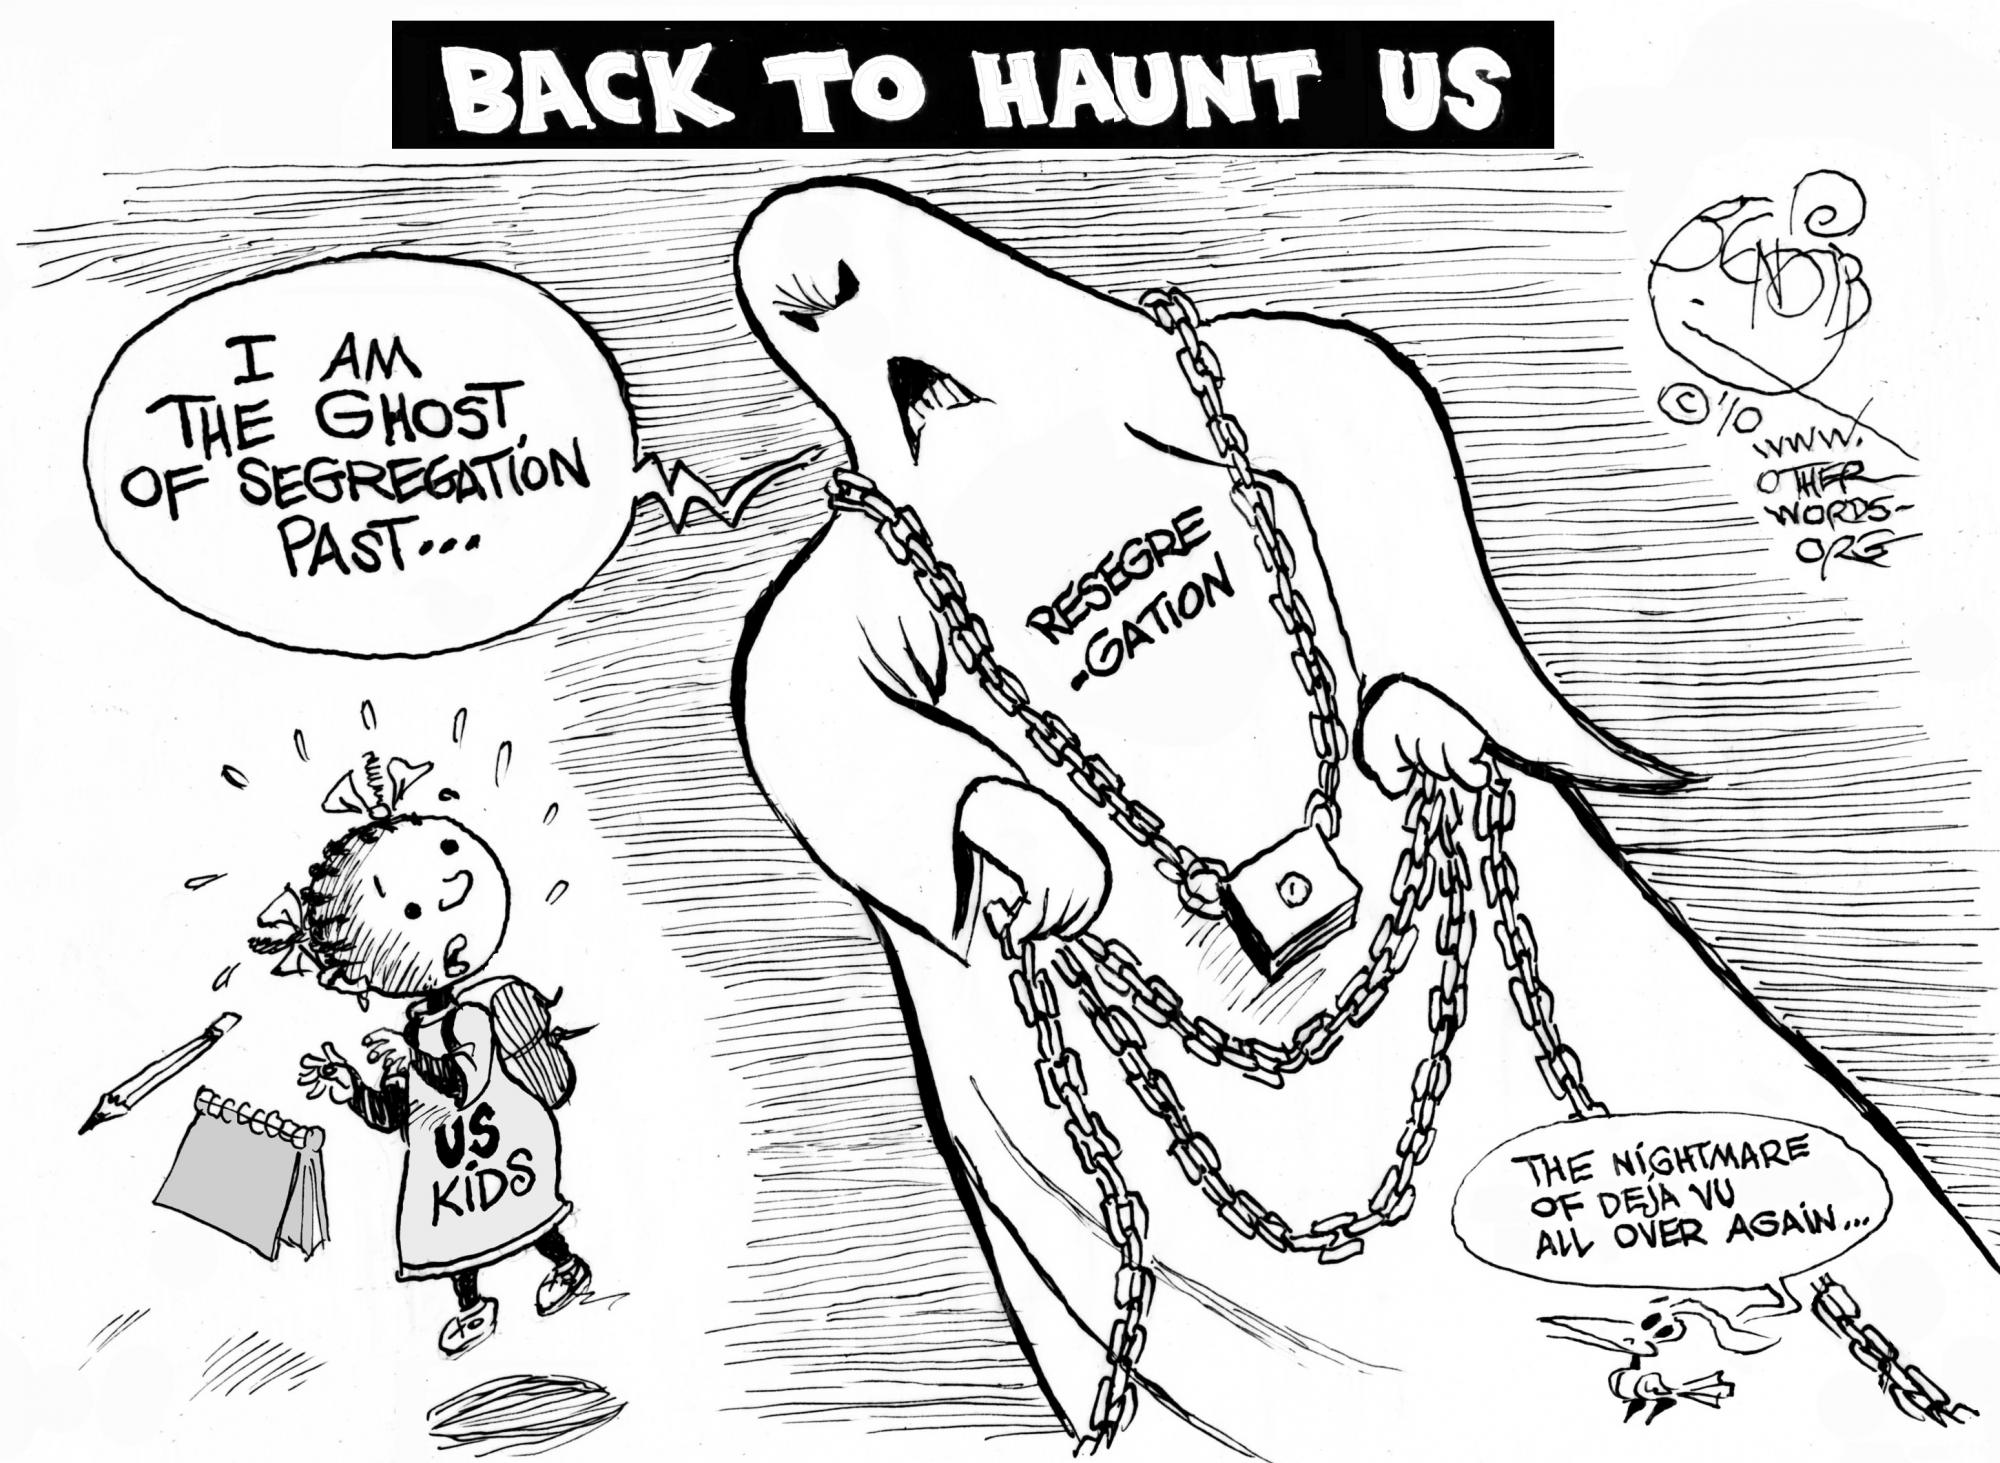 Segregation Ghost